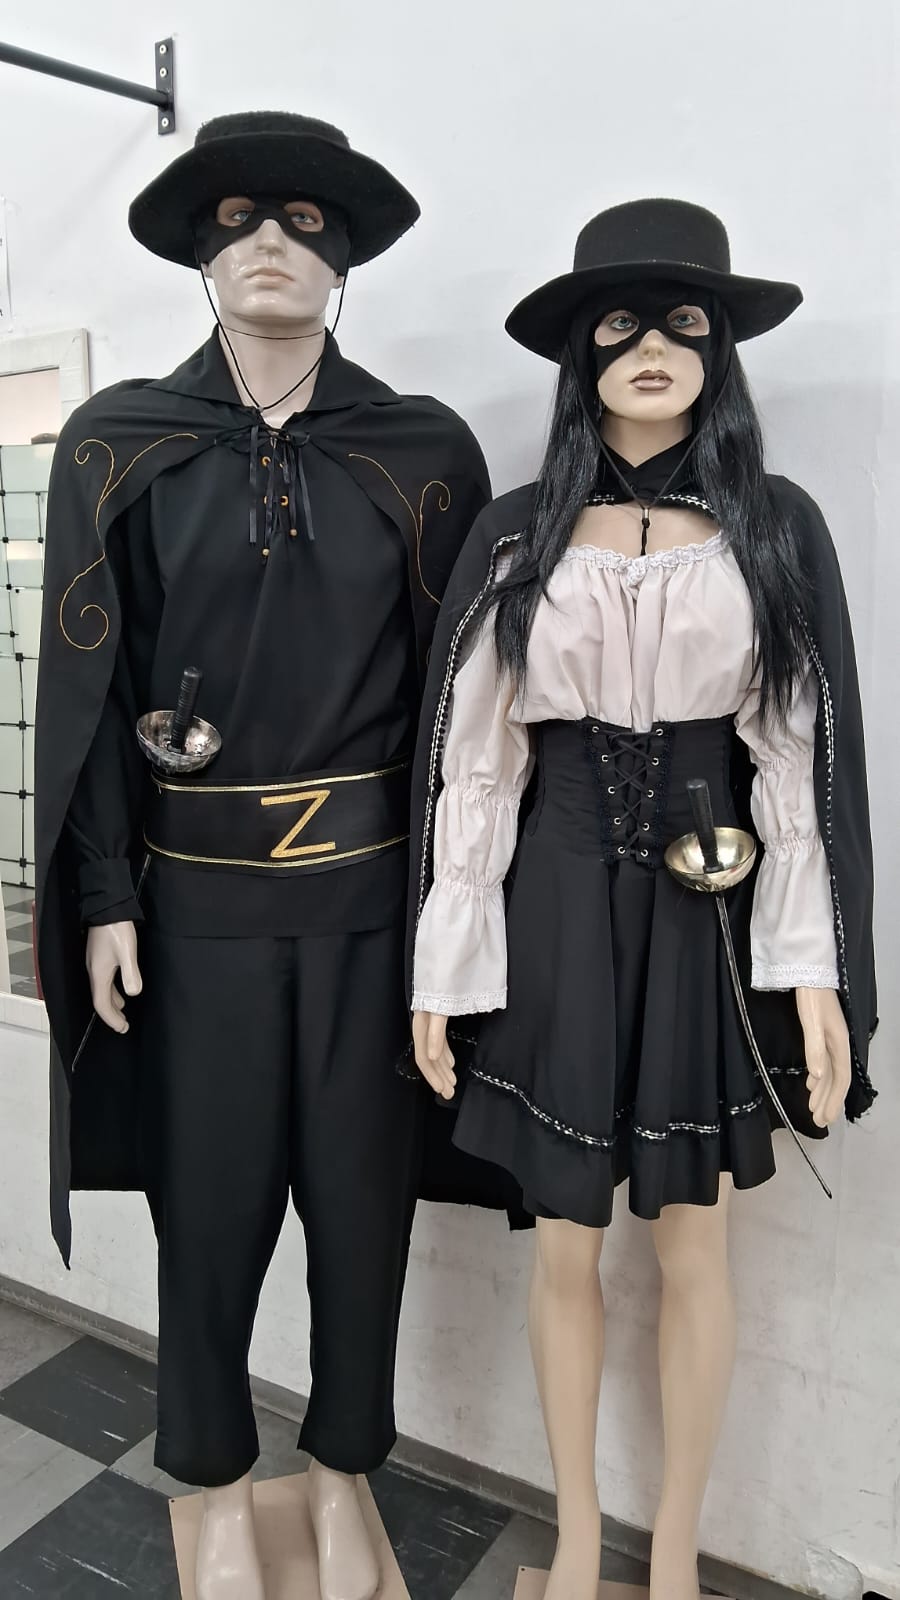 Zorro preto/dourado e Zorra